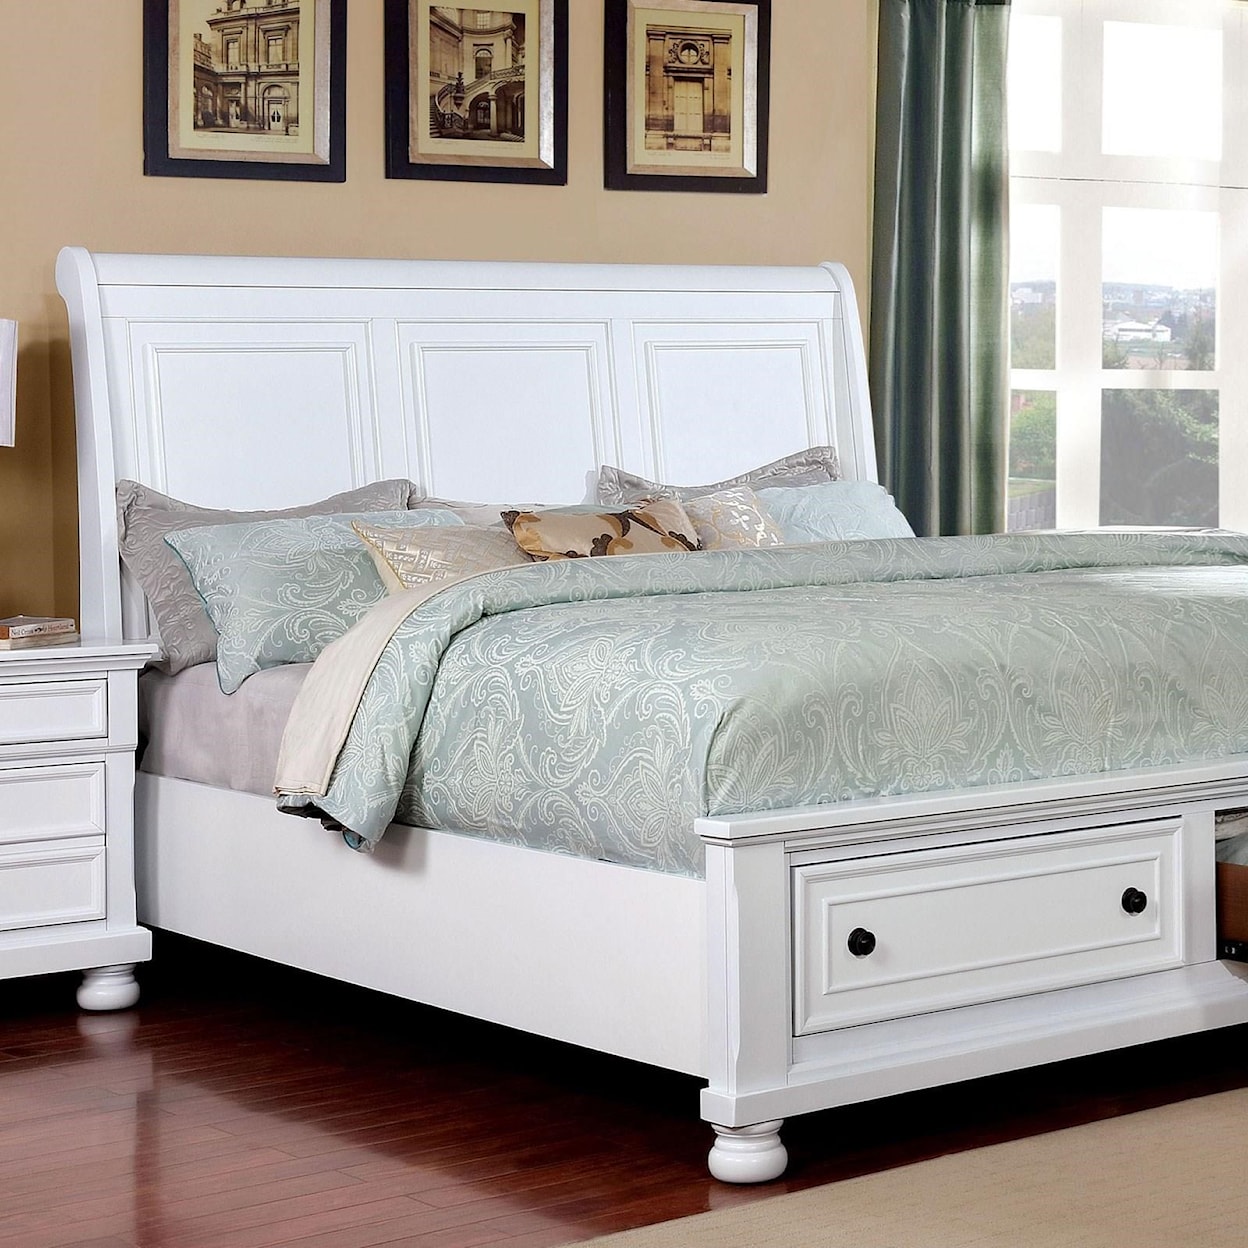 Furniture of America Castor California King Bed